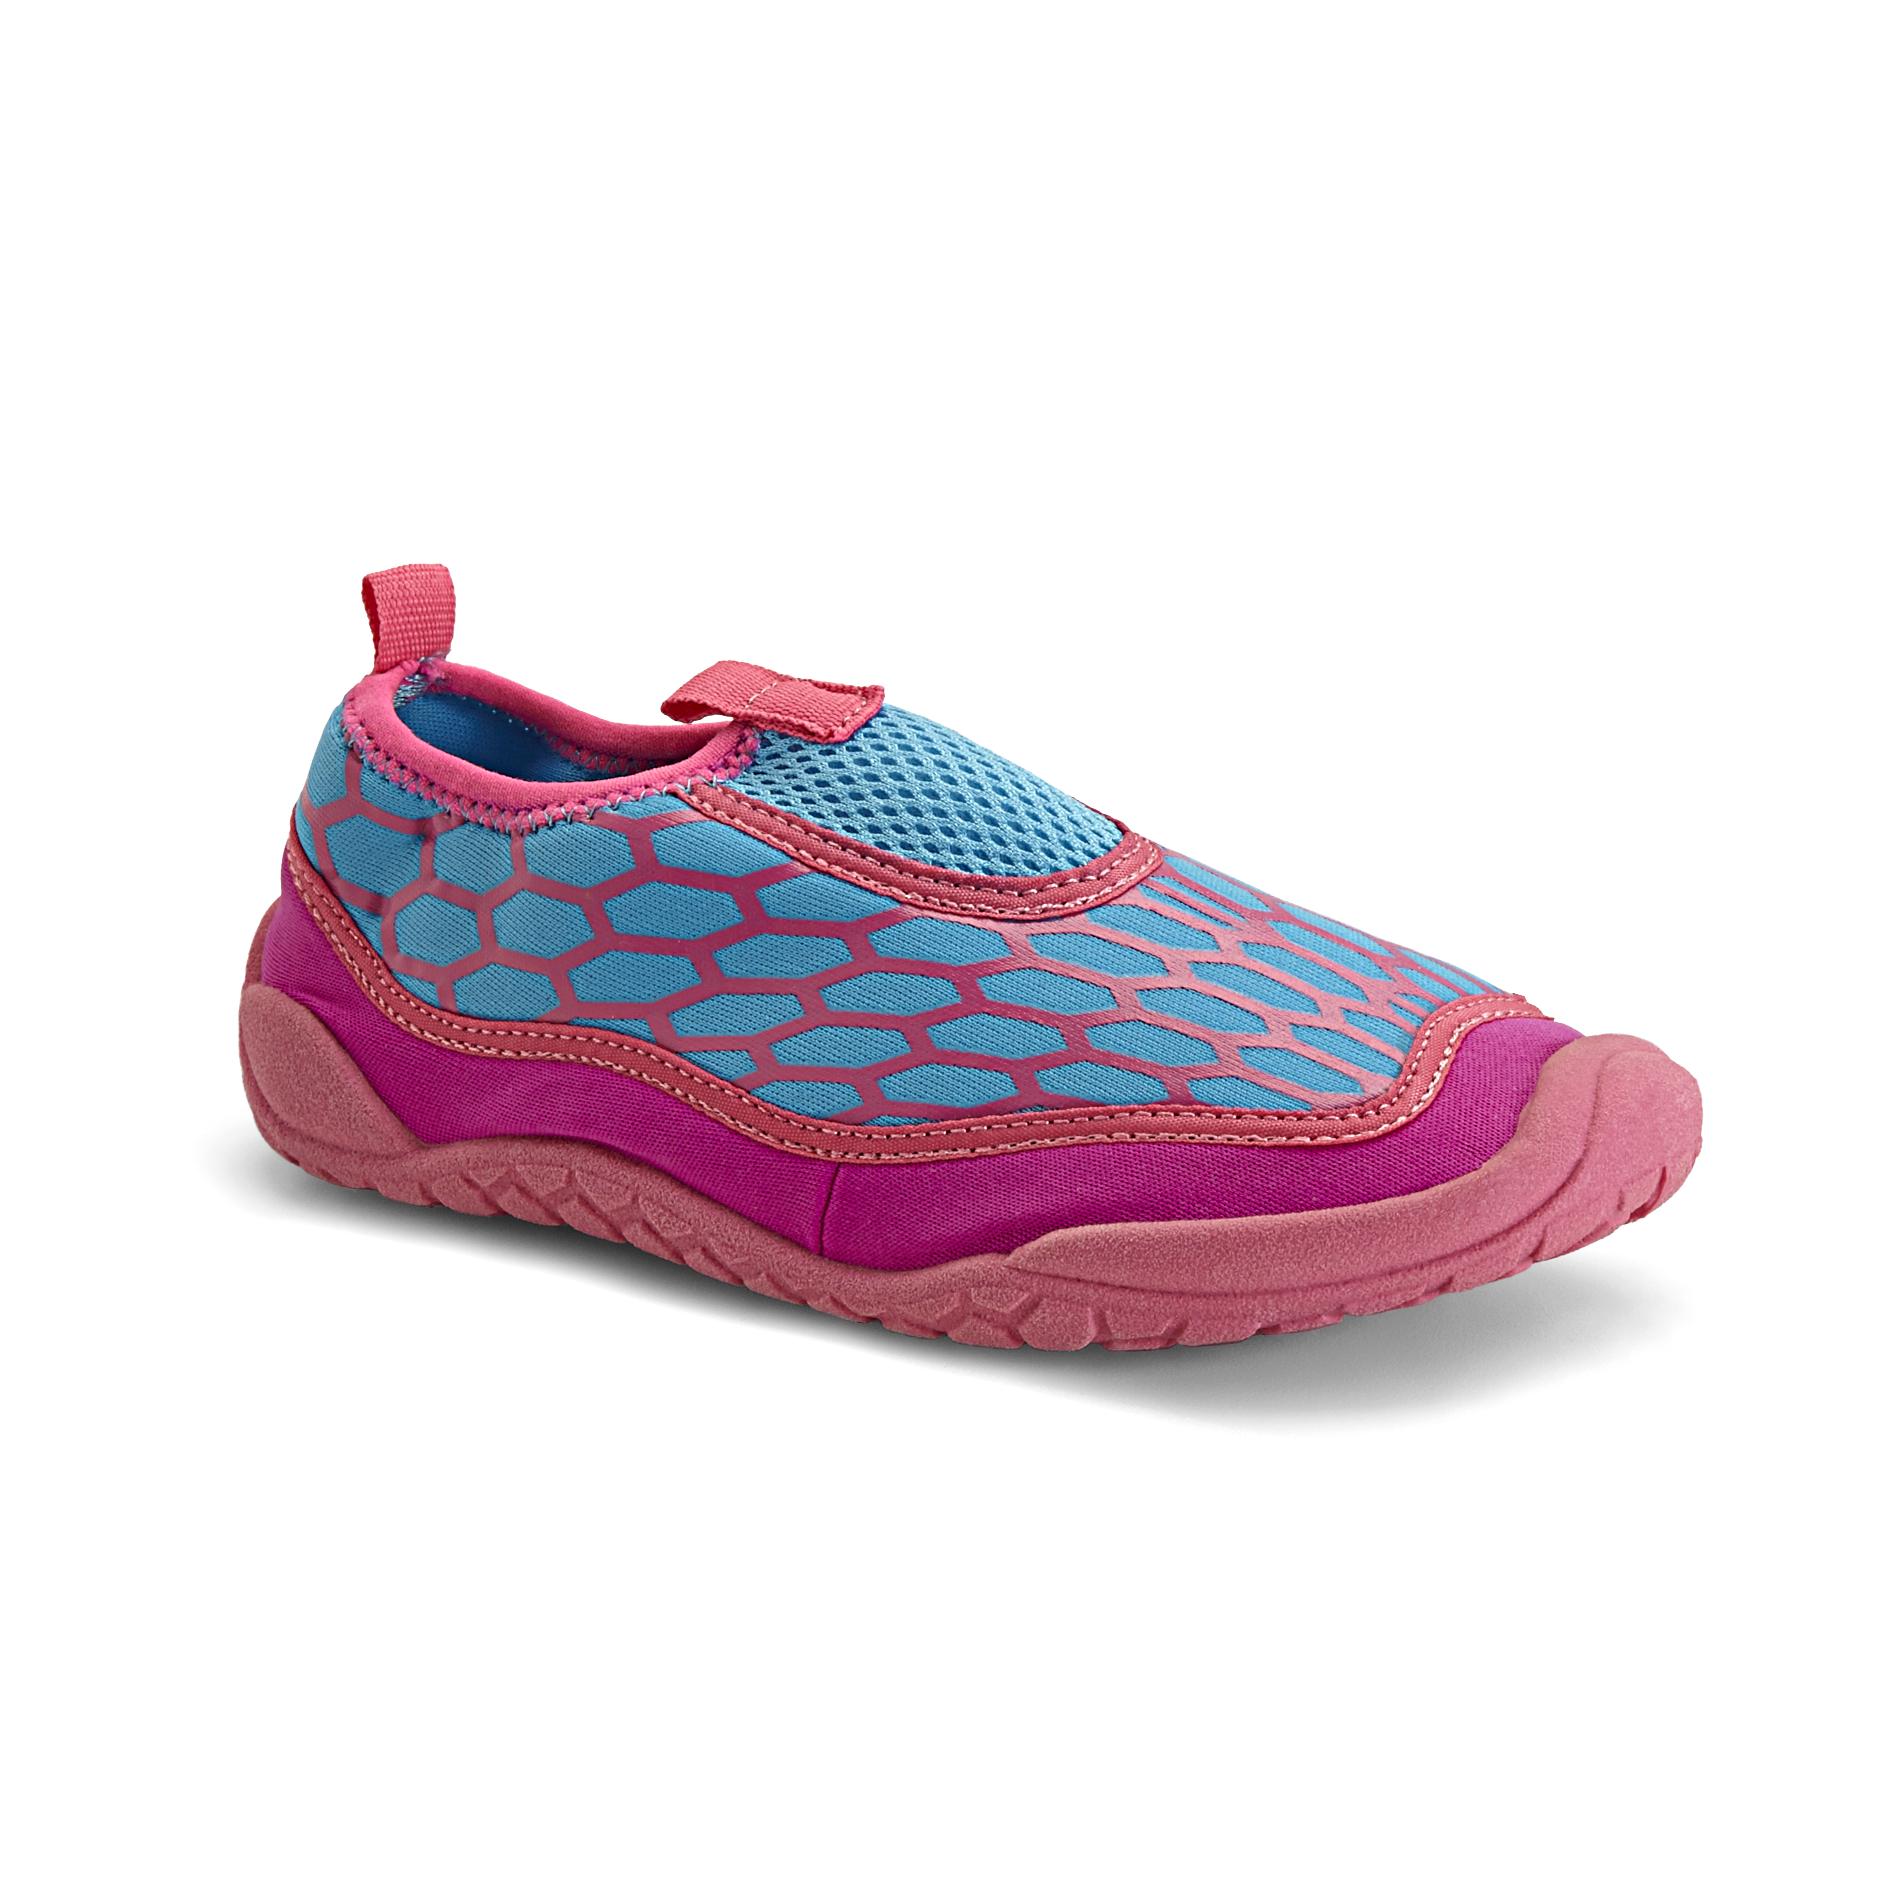 Athletech Girl's Ari Blue/Neon Pink Water Shoe